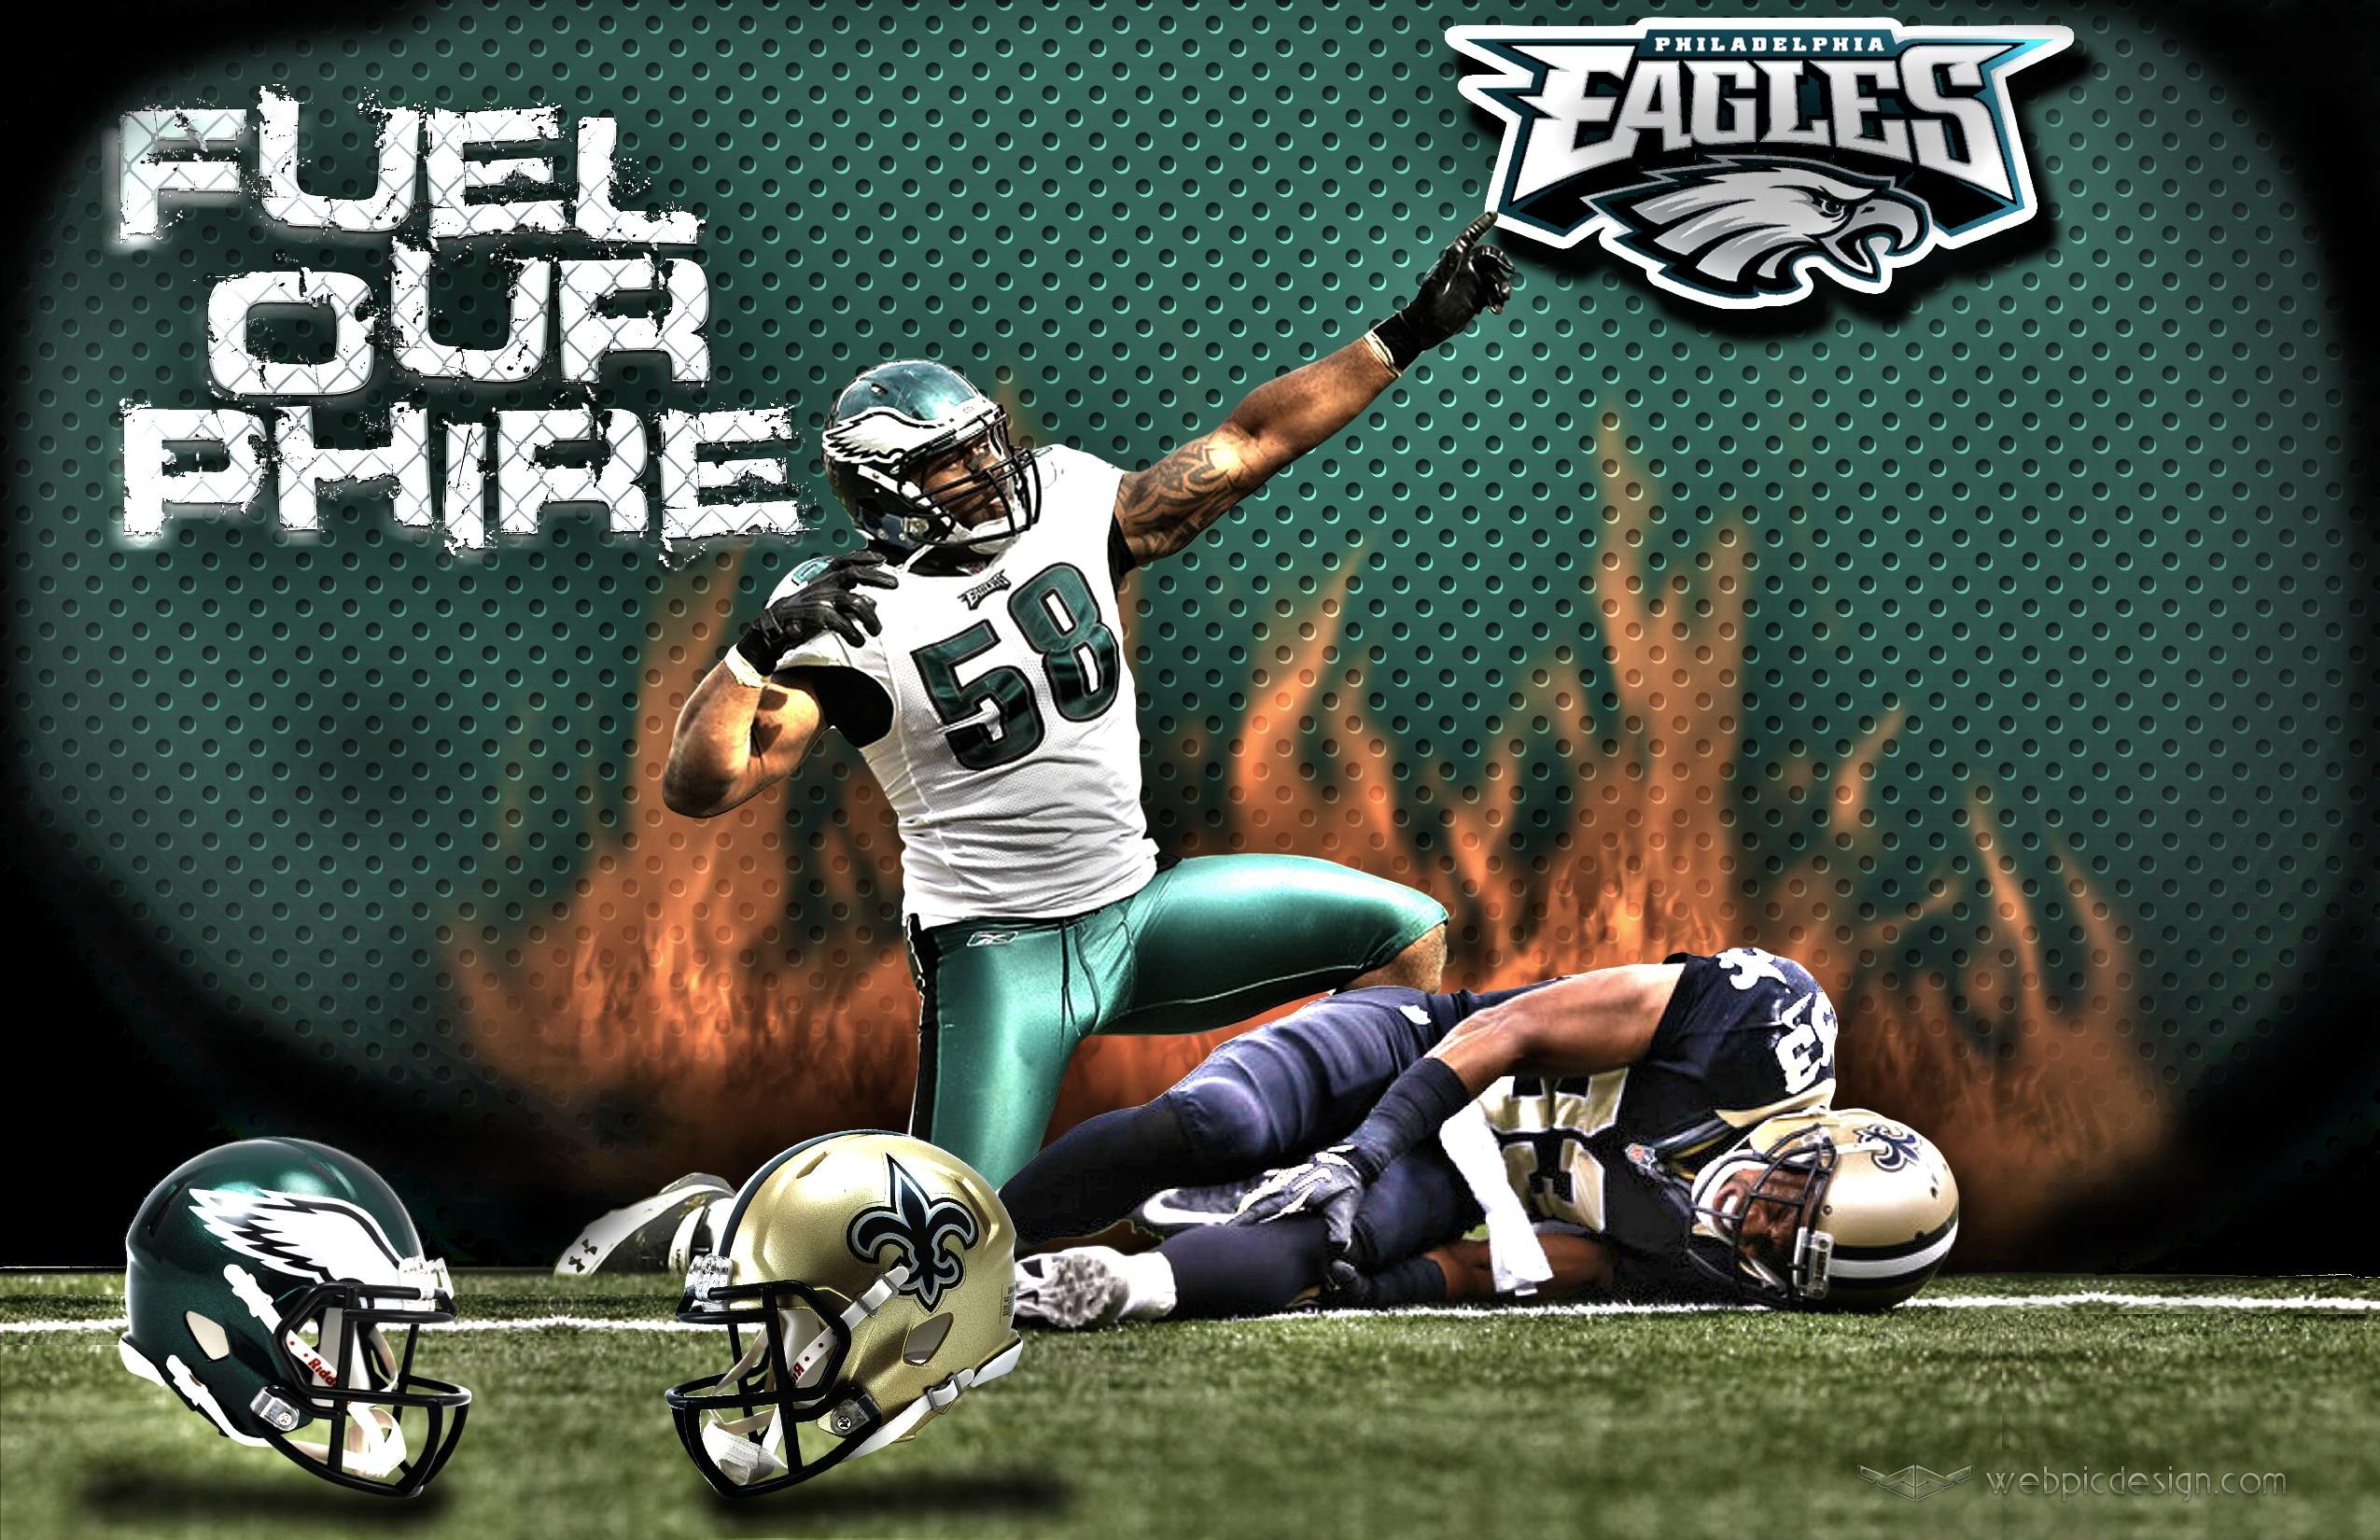 2550x1650 Philadelphia Eagles New Orleans Saints Wallpaper Webpic Design Inc ..